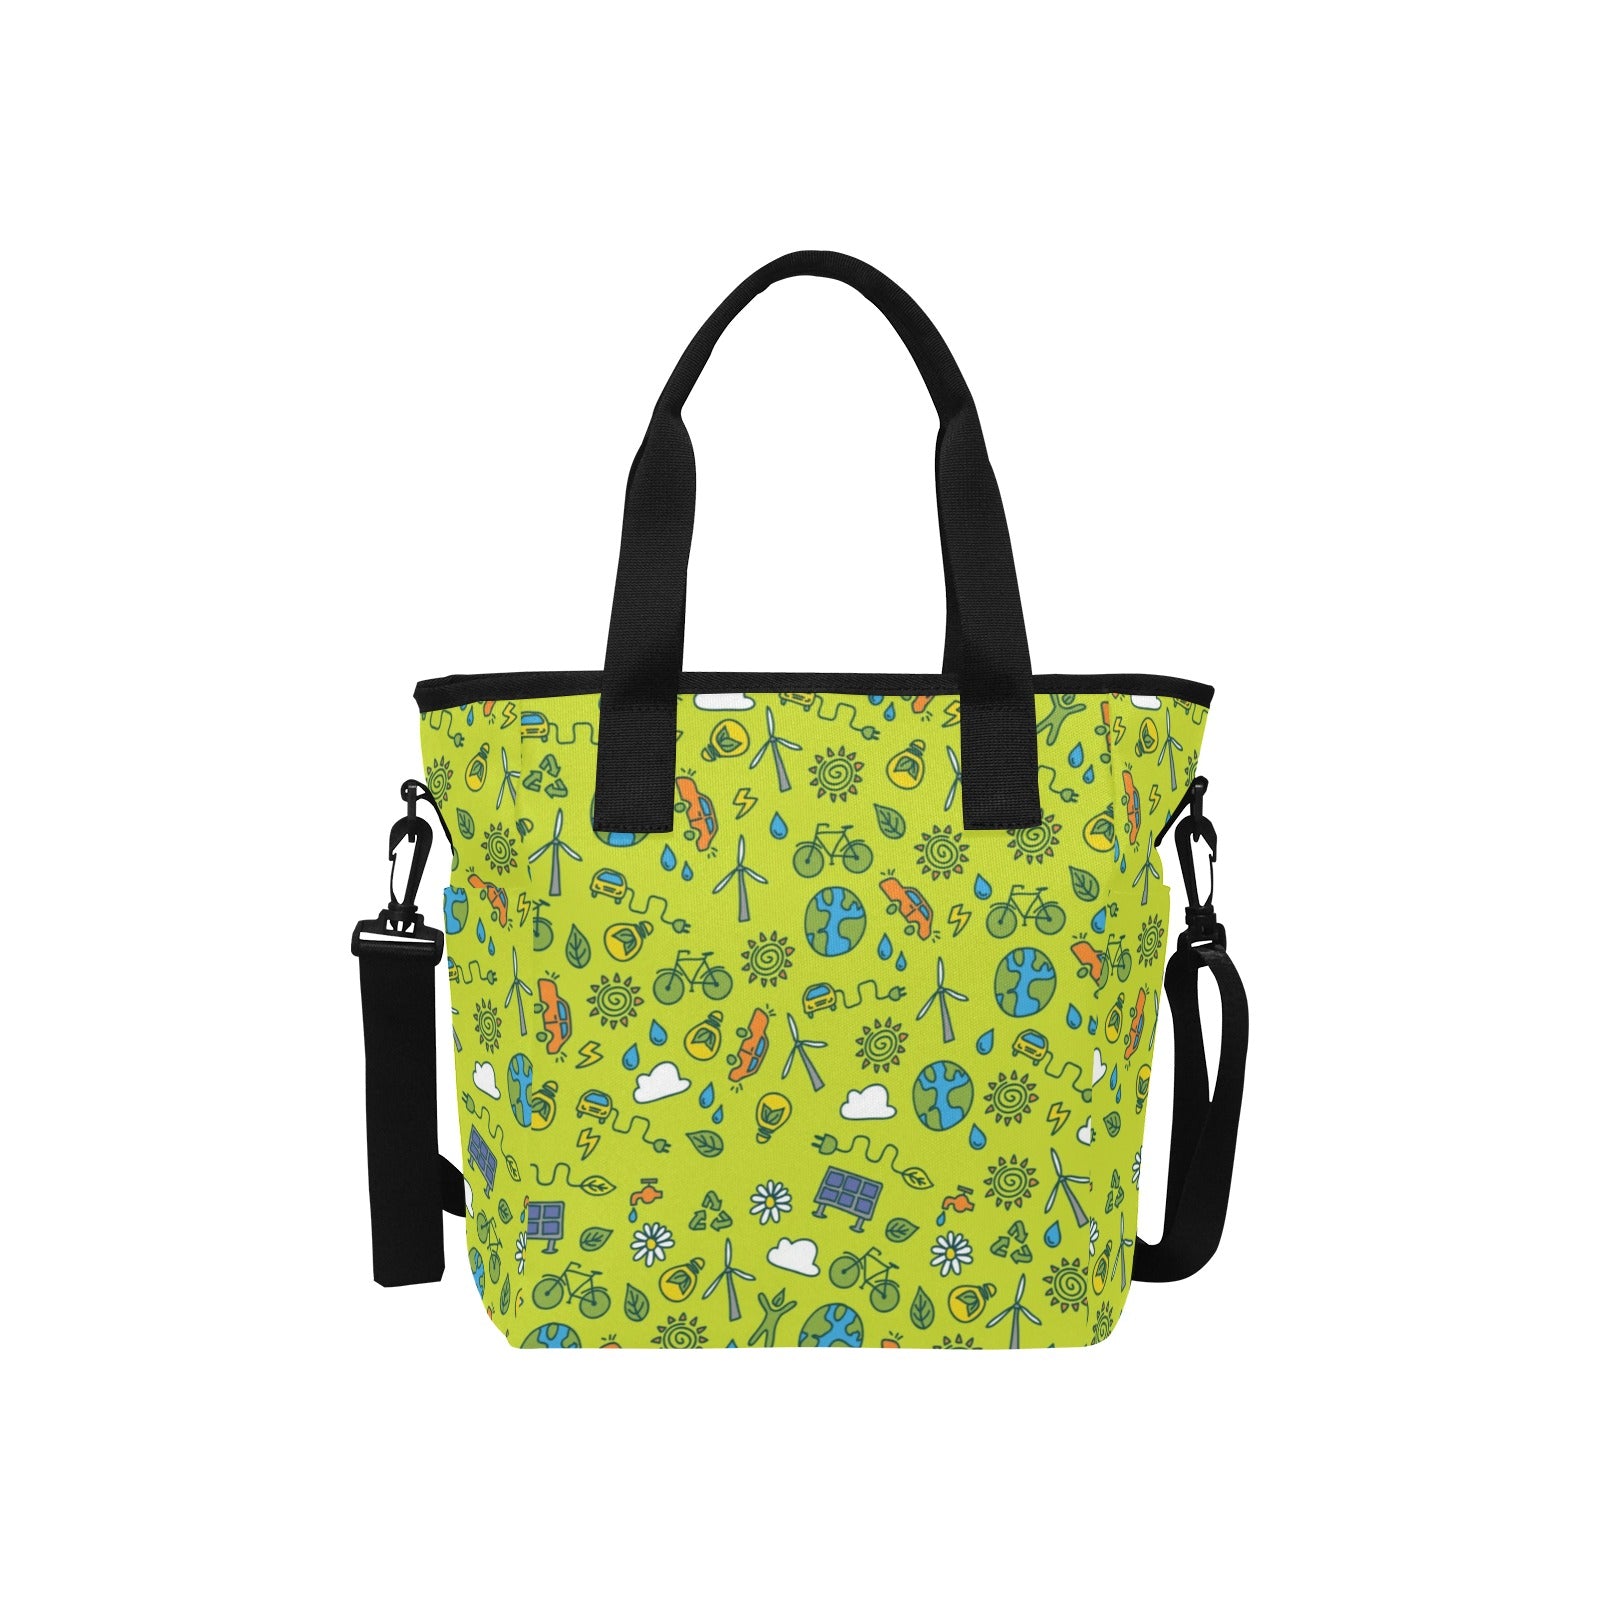 Go Green - Tote Bag with Shoulder Strap Nylon Tote Bag